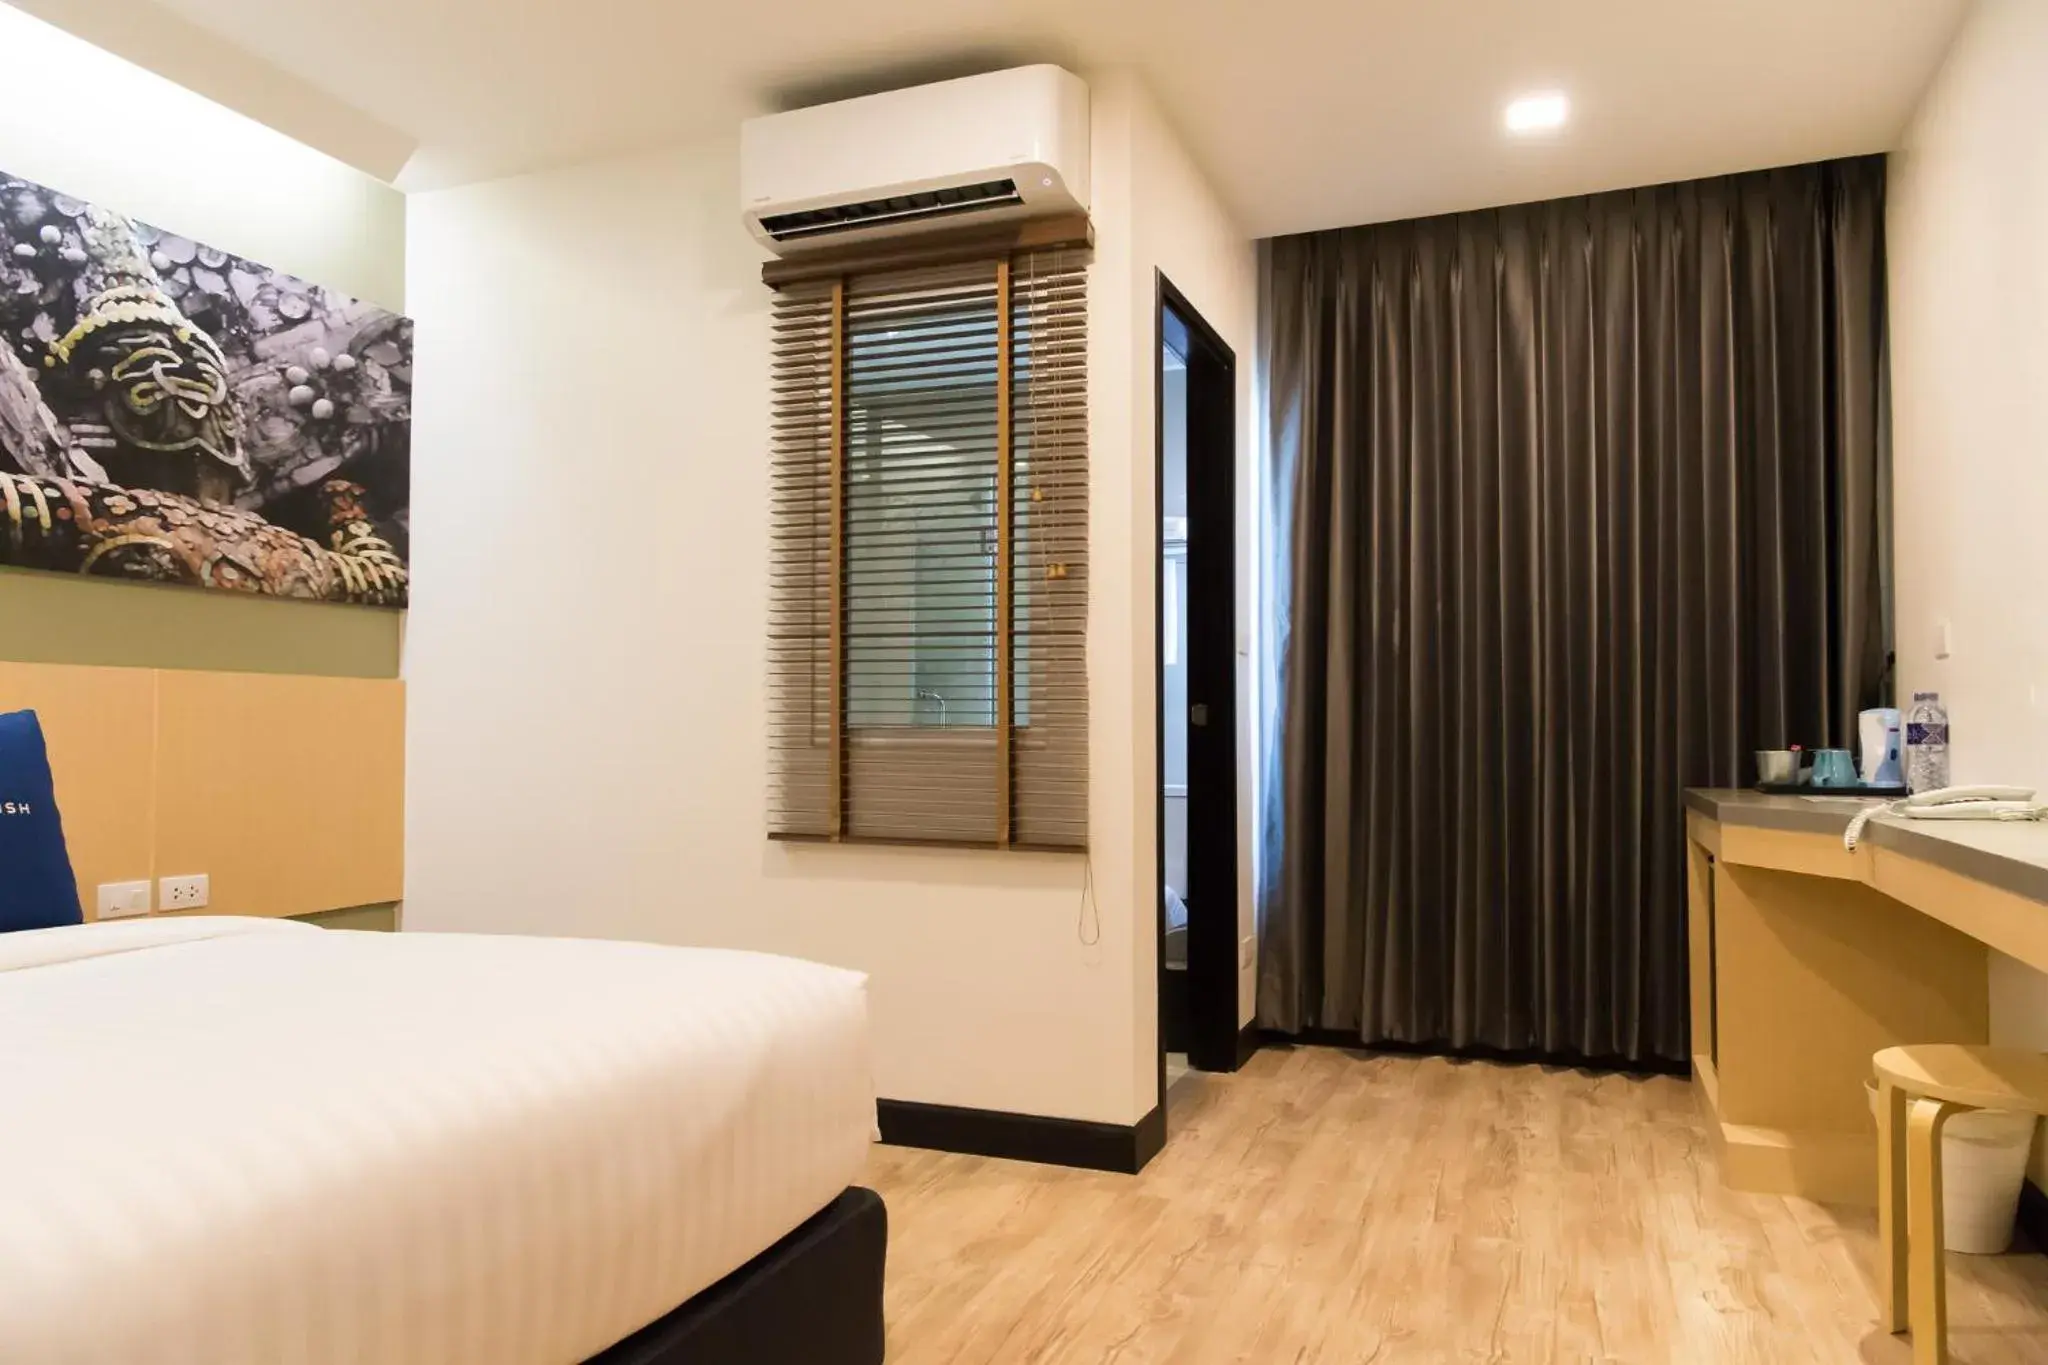 Area and facilities, Bed in Tarawish Hotel